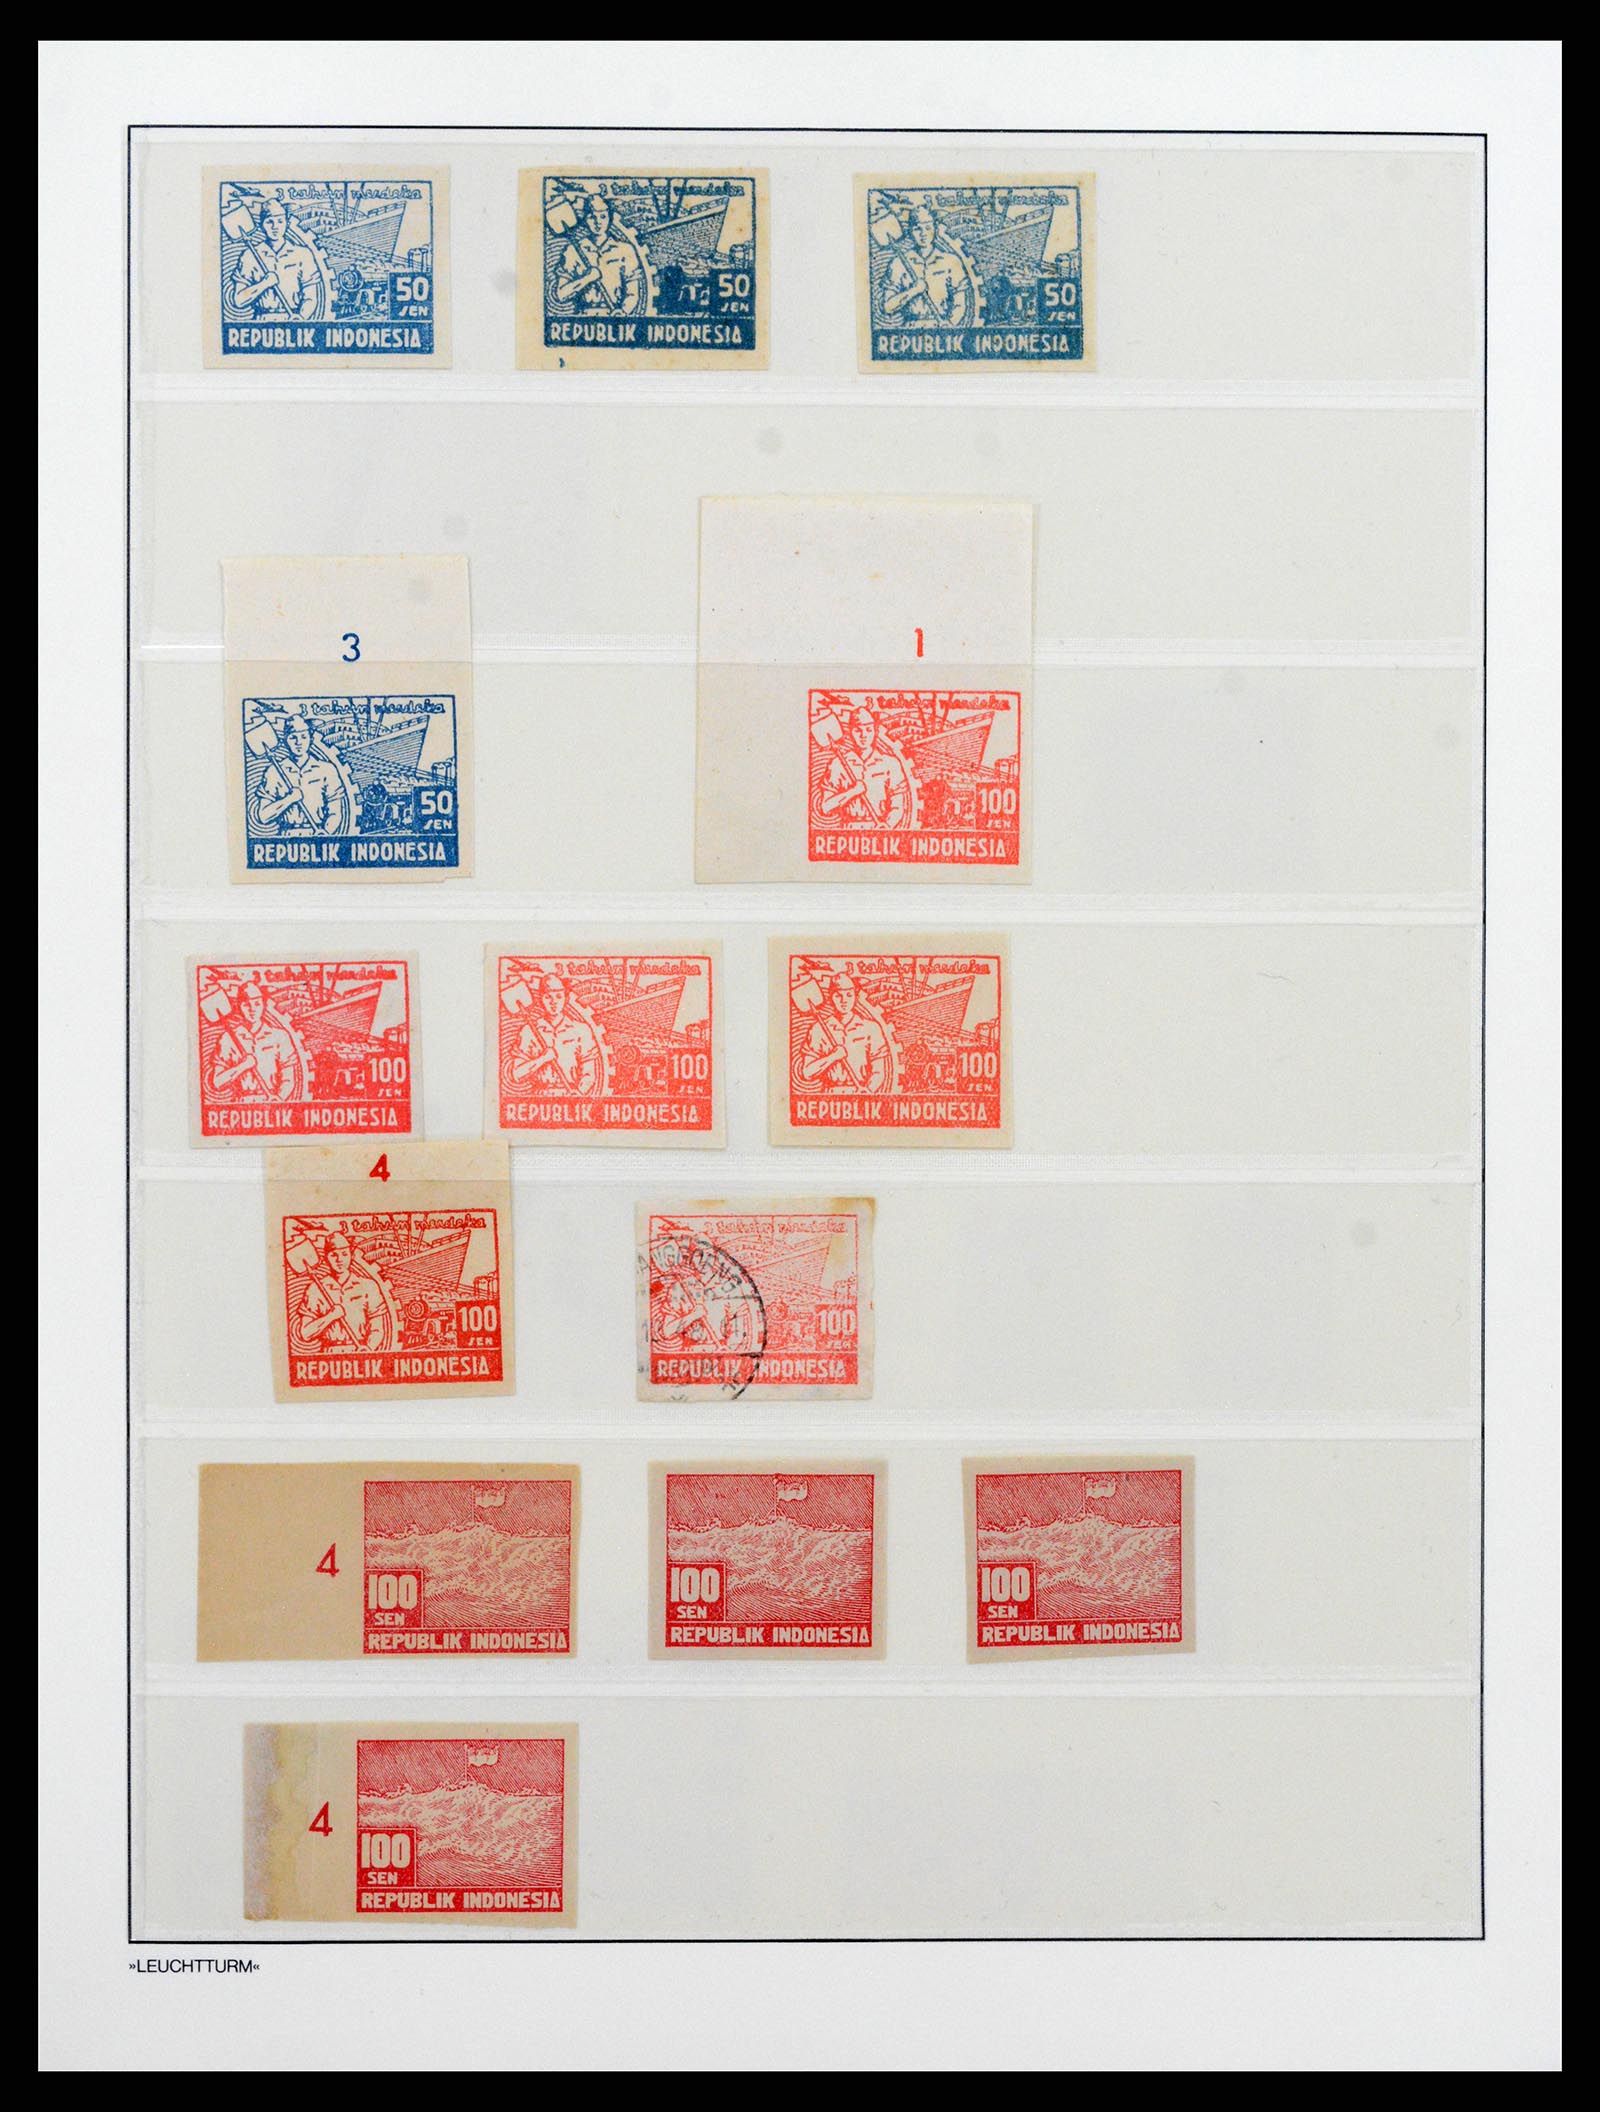 37435 034 - Stamp collection 37435 Indonesia interim period 1945-1948.